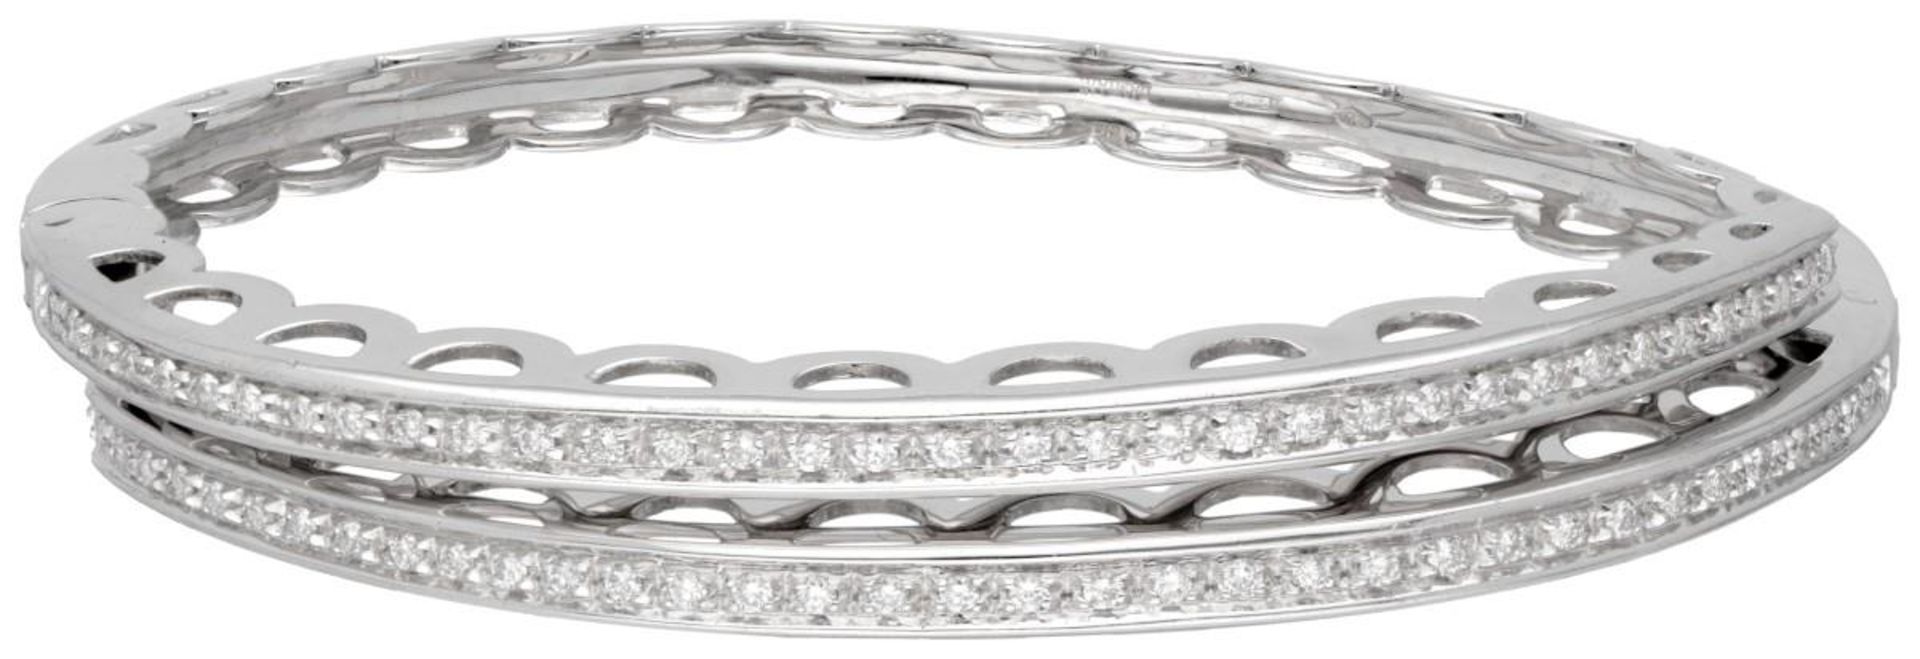 18K. White gold Damiani bangle bracelet set with approx. 0.70 ct. diamond.